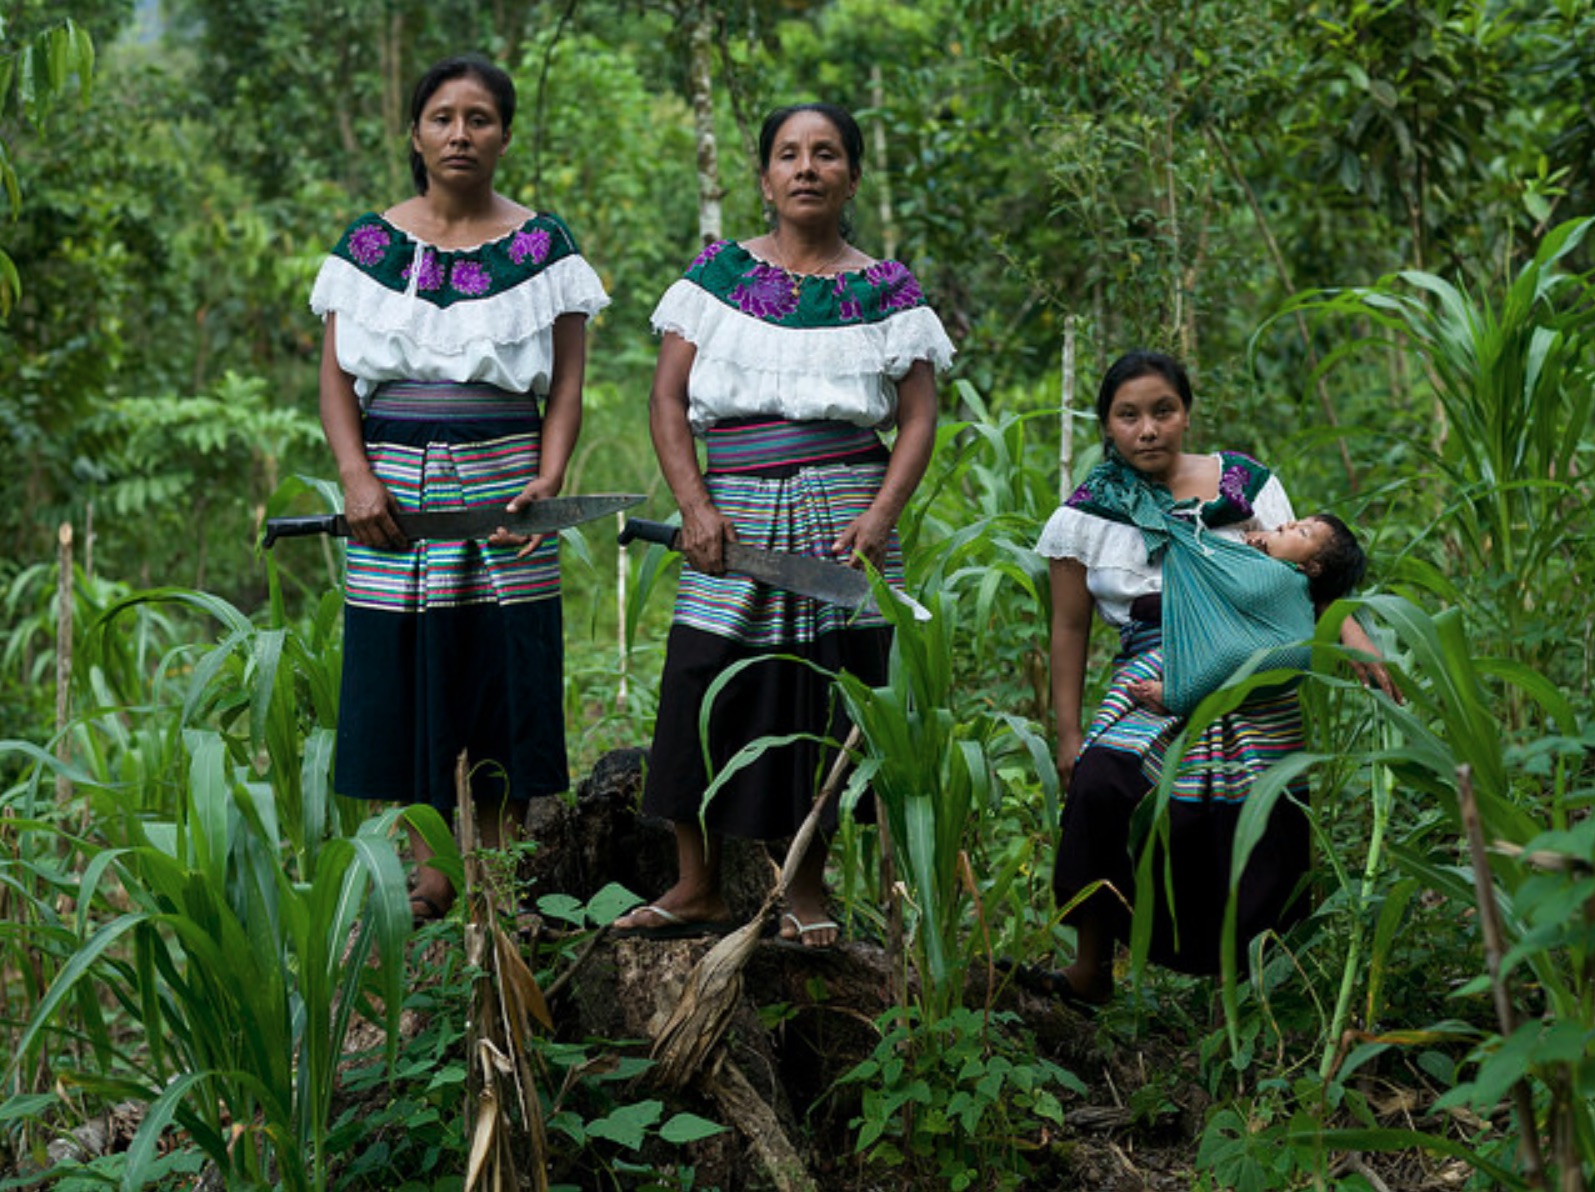 Mexican corn farming women, journal of wild culture, ©2020